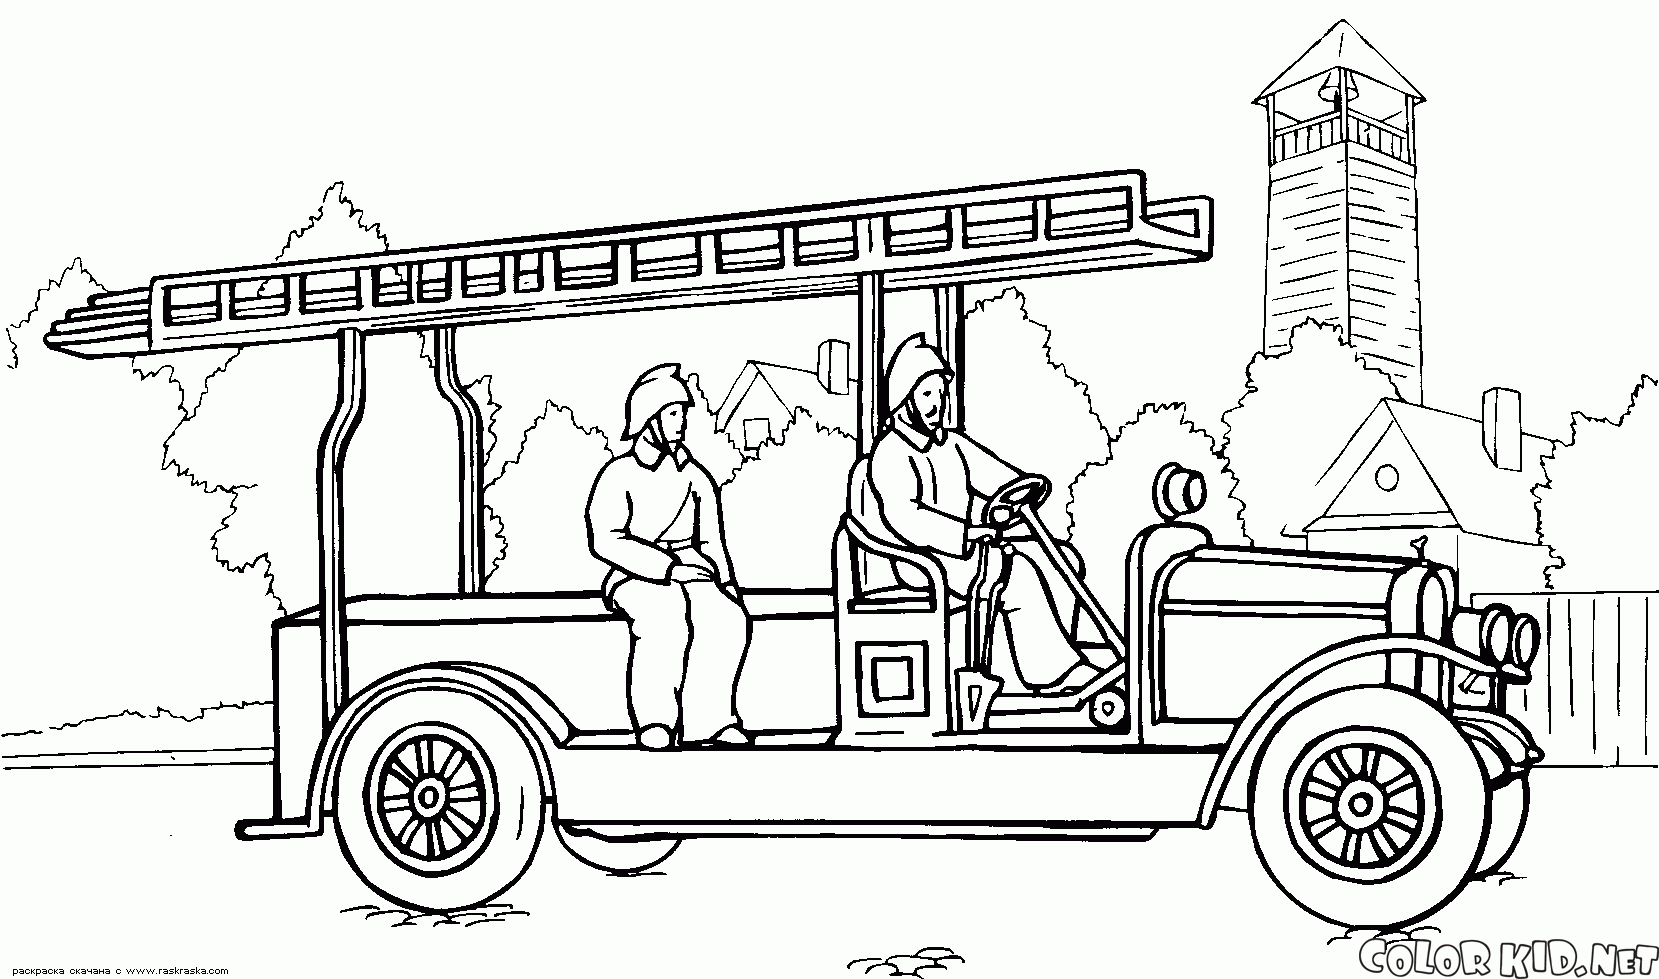 Dibujo para colorear - Vehículo de bomberos